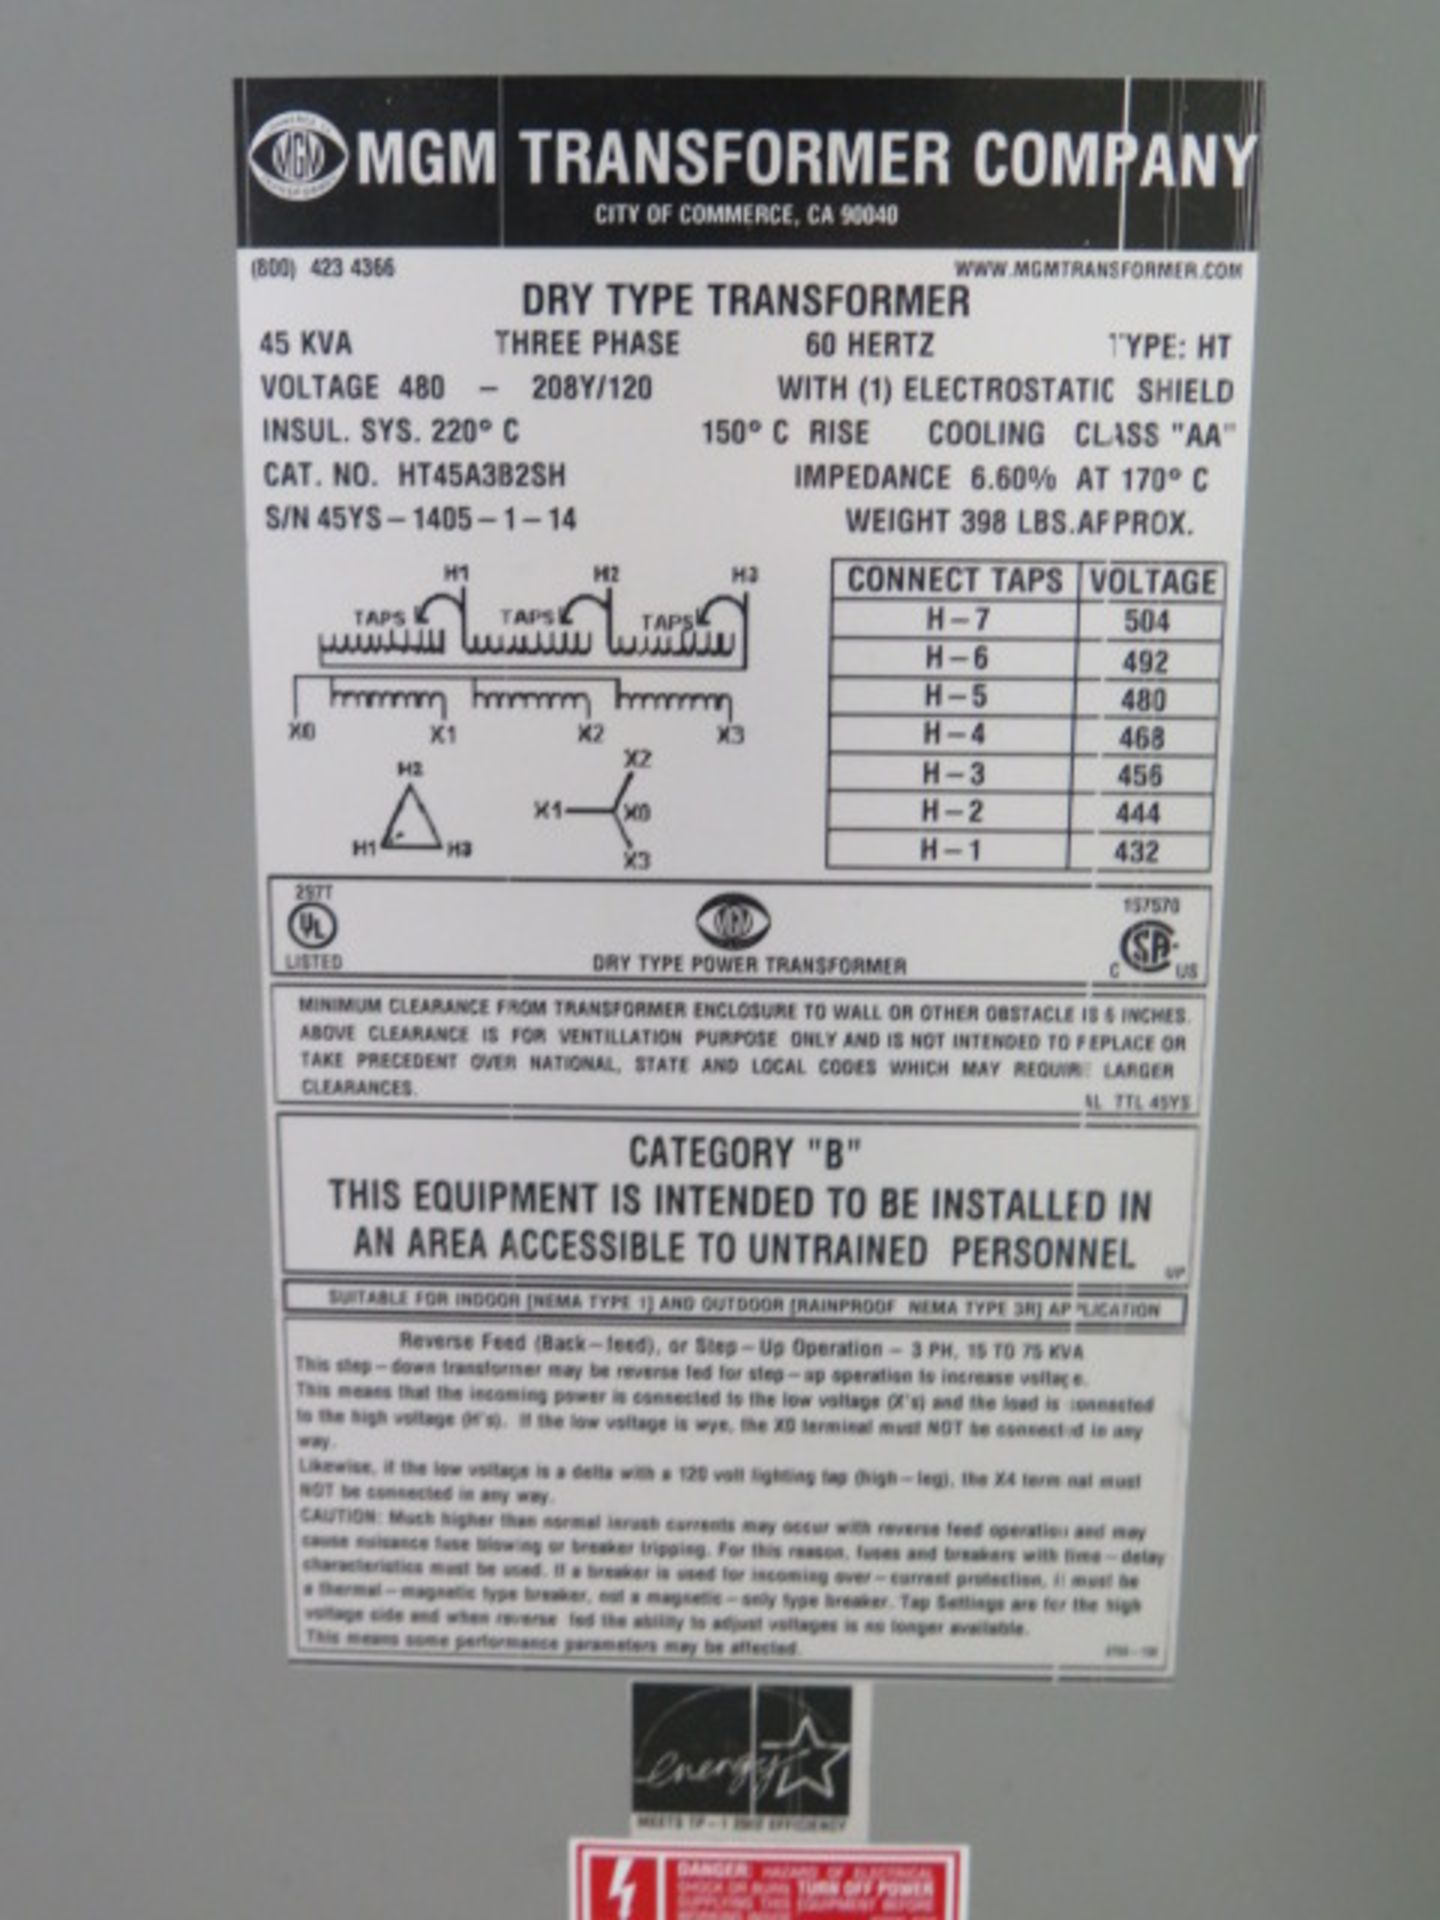 MGM Transformers 480-208Y/120 Volt Transformer - Image 2 of 2